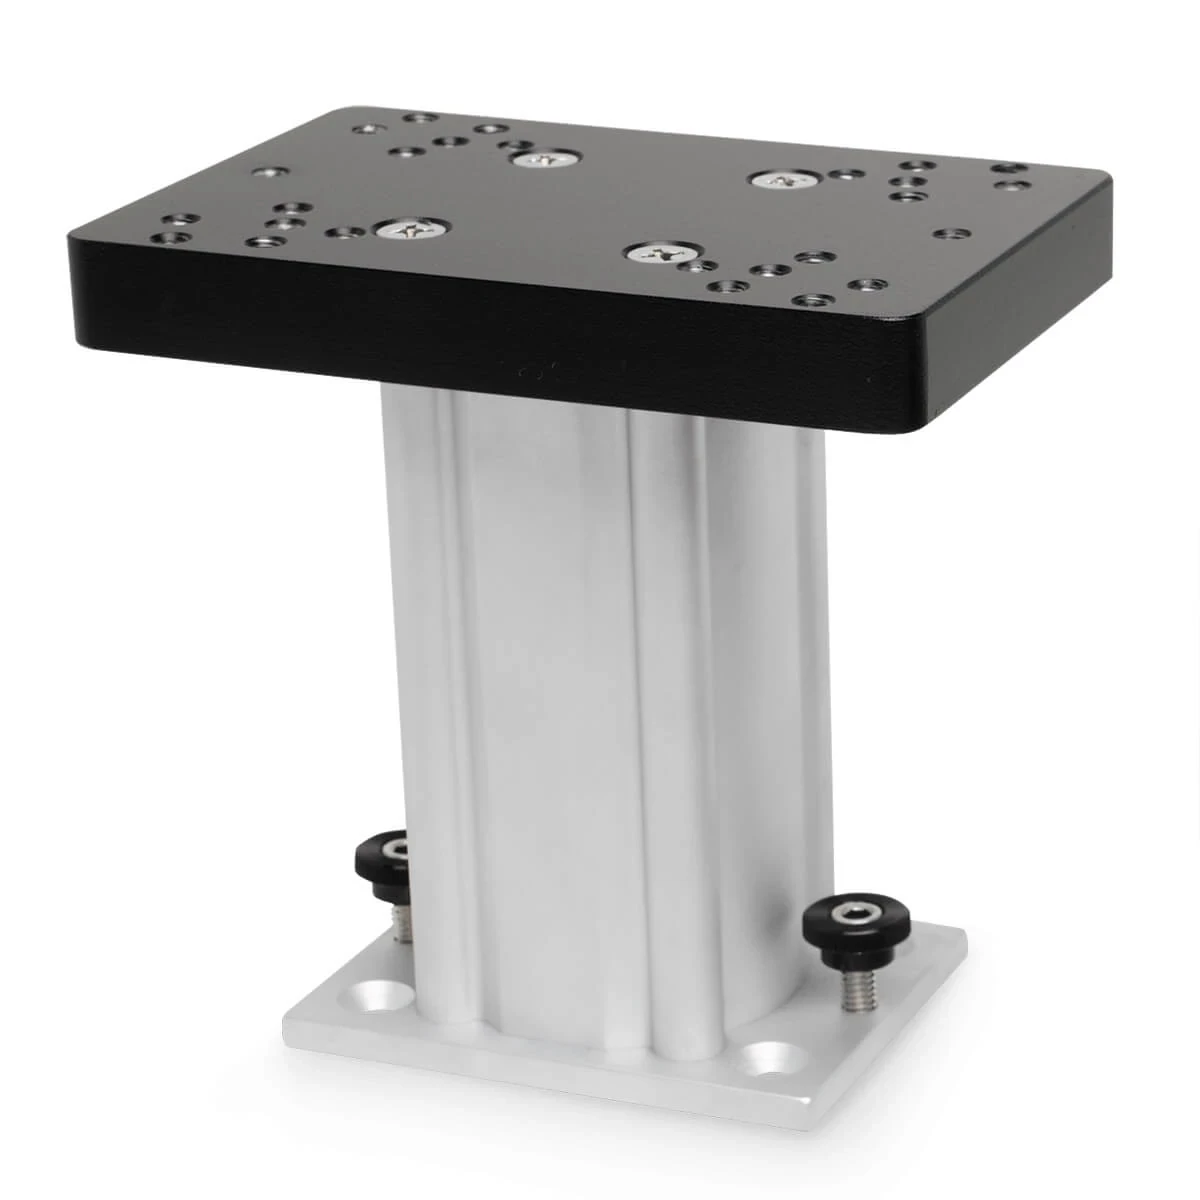 6-inch aluminum fixed base pedestal mount